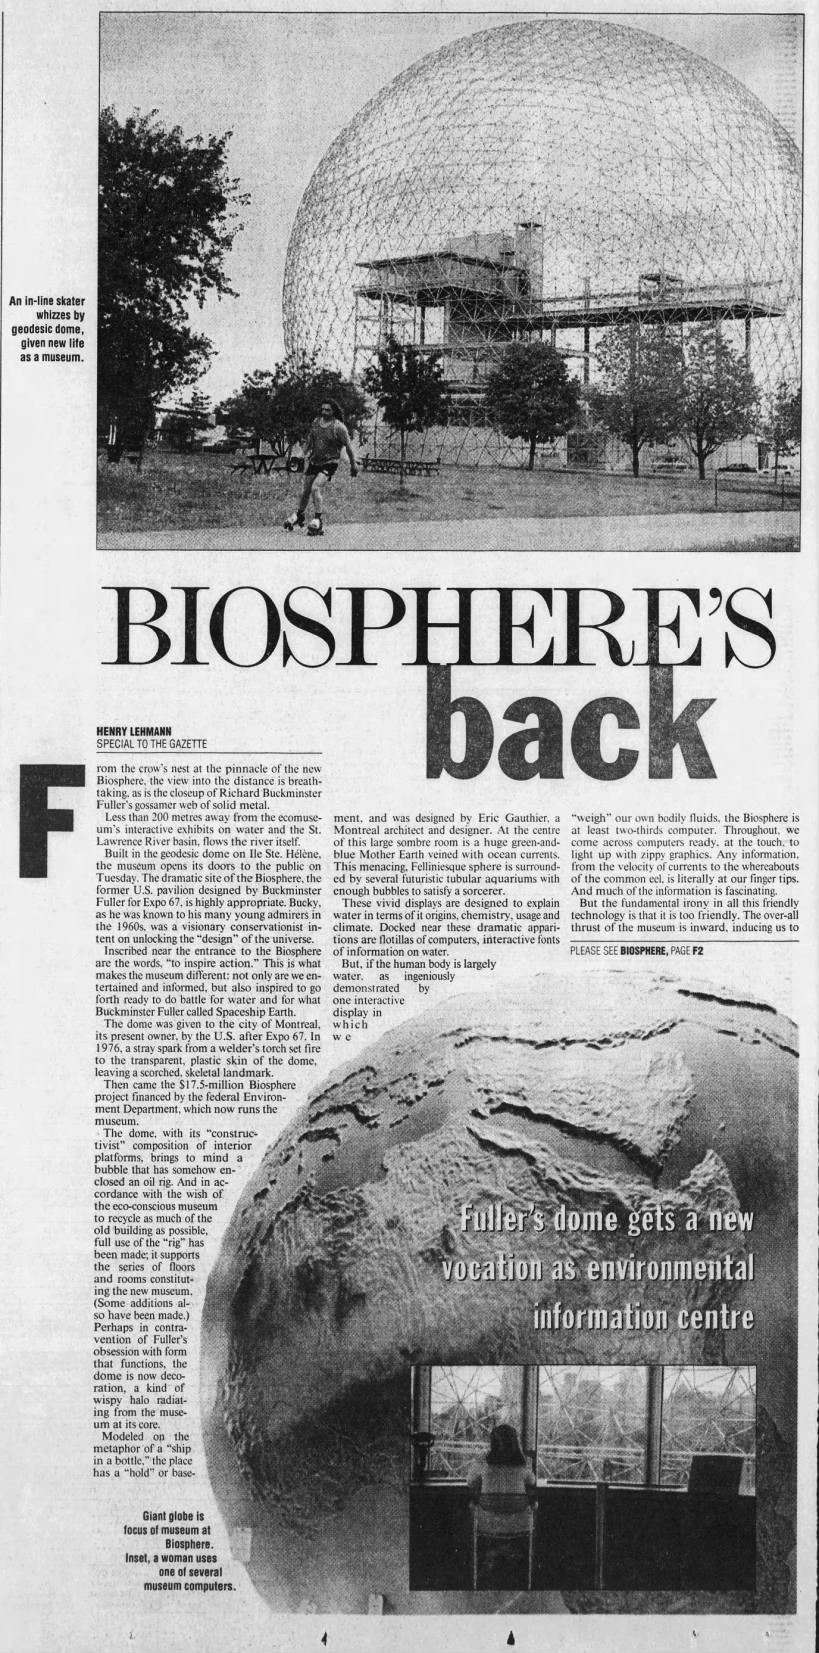 Biosphere's back